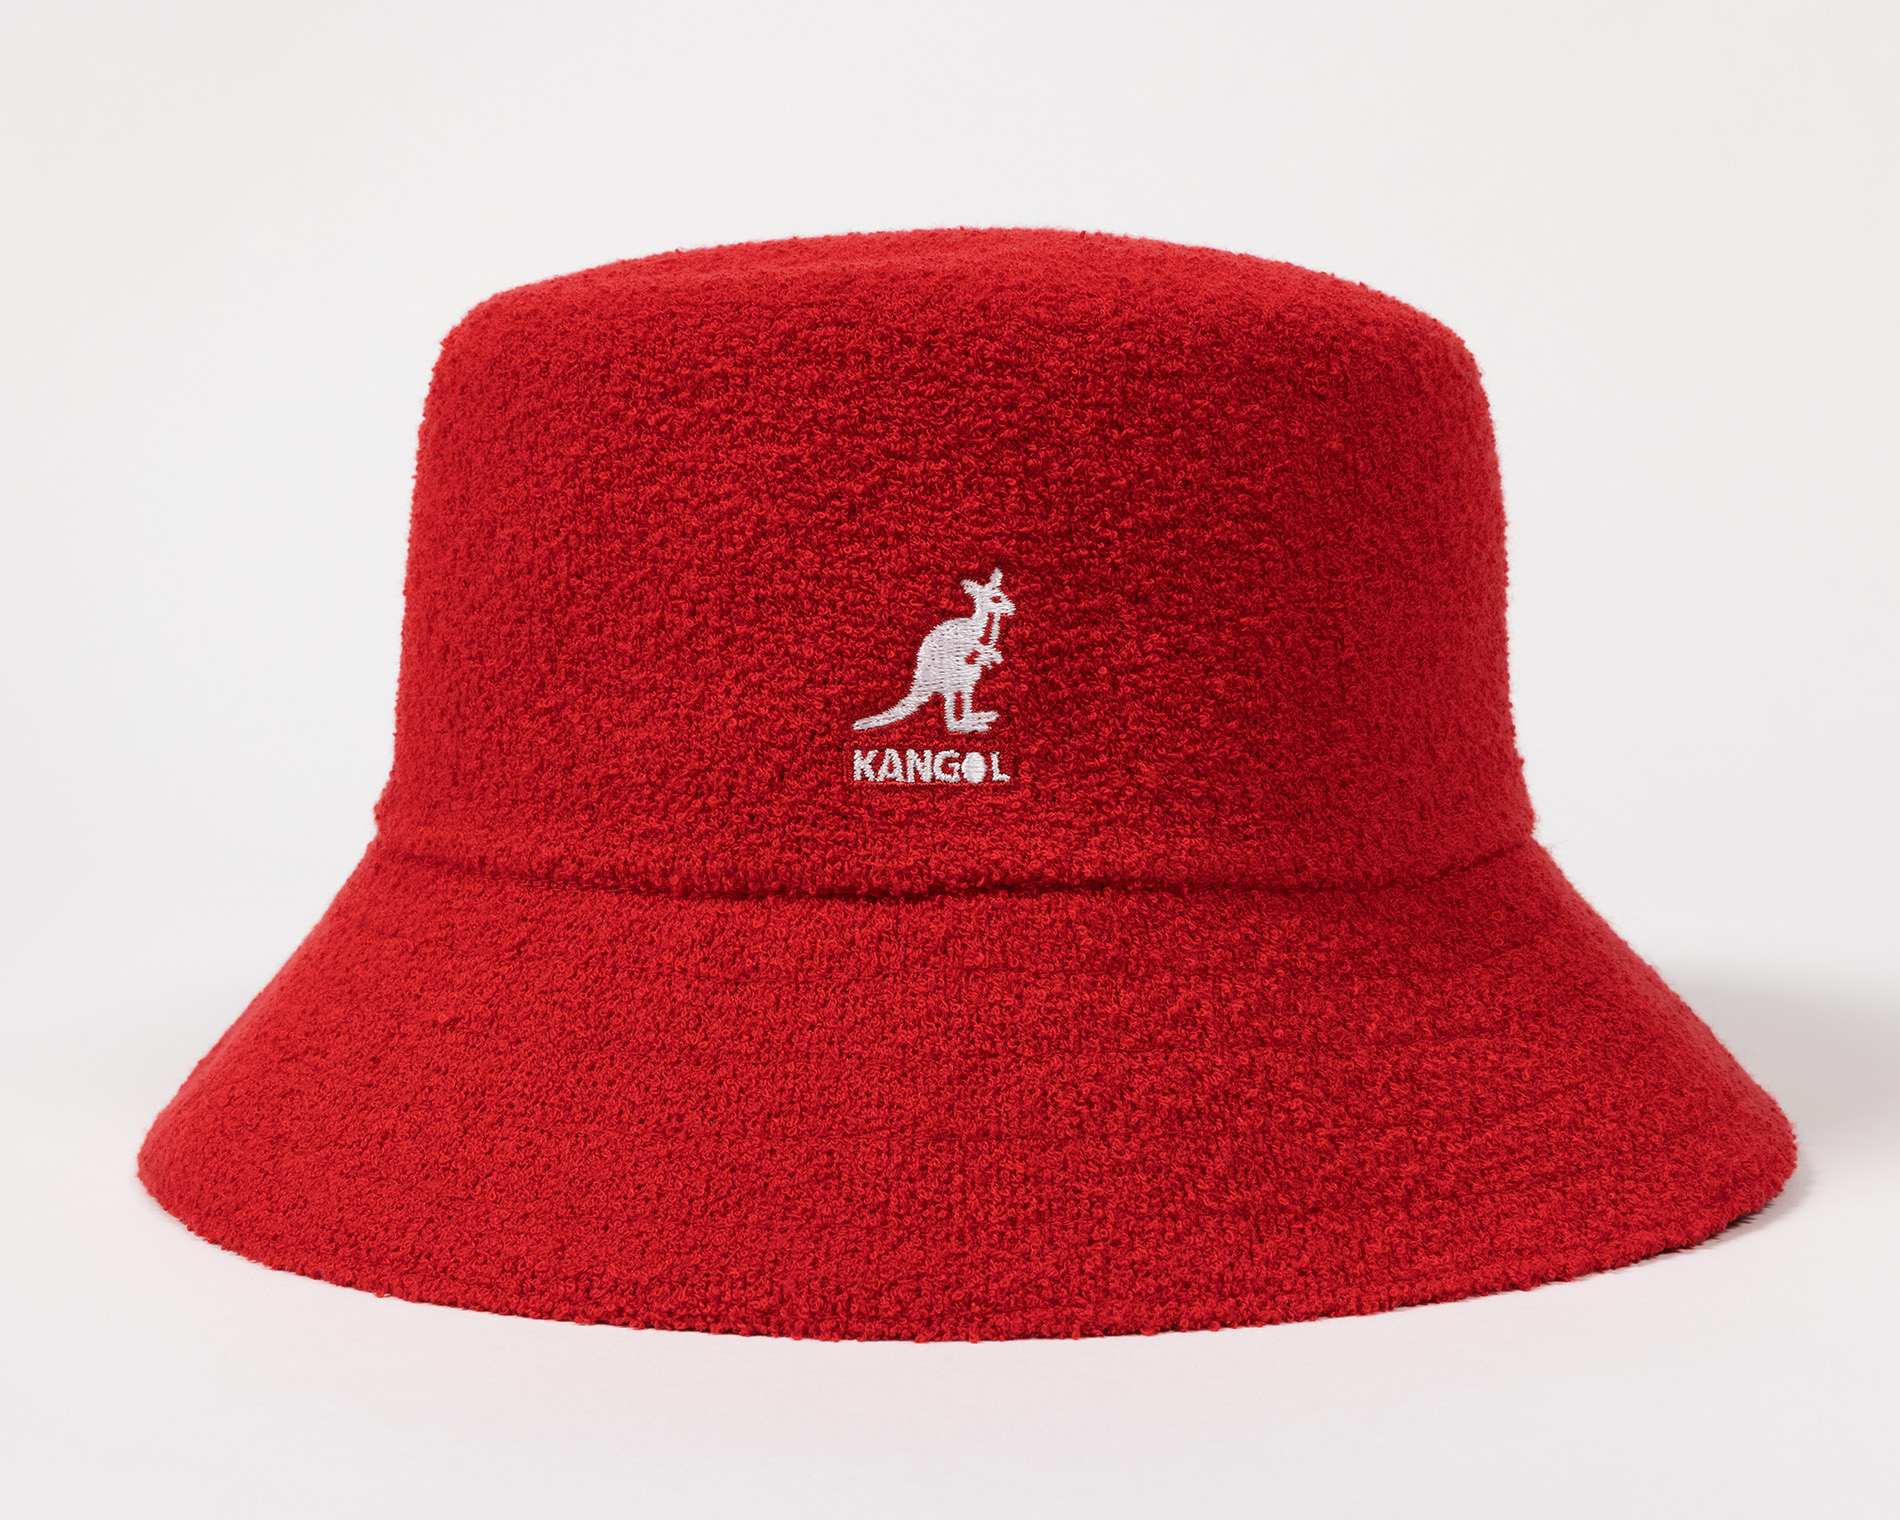 red bucket hat